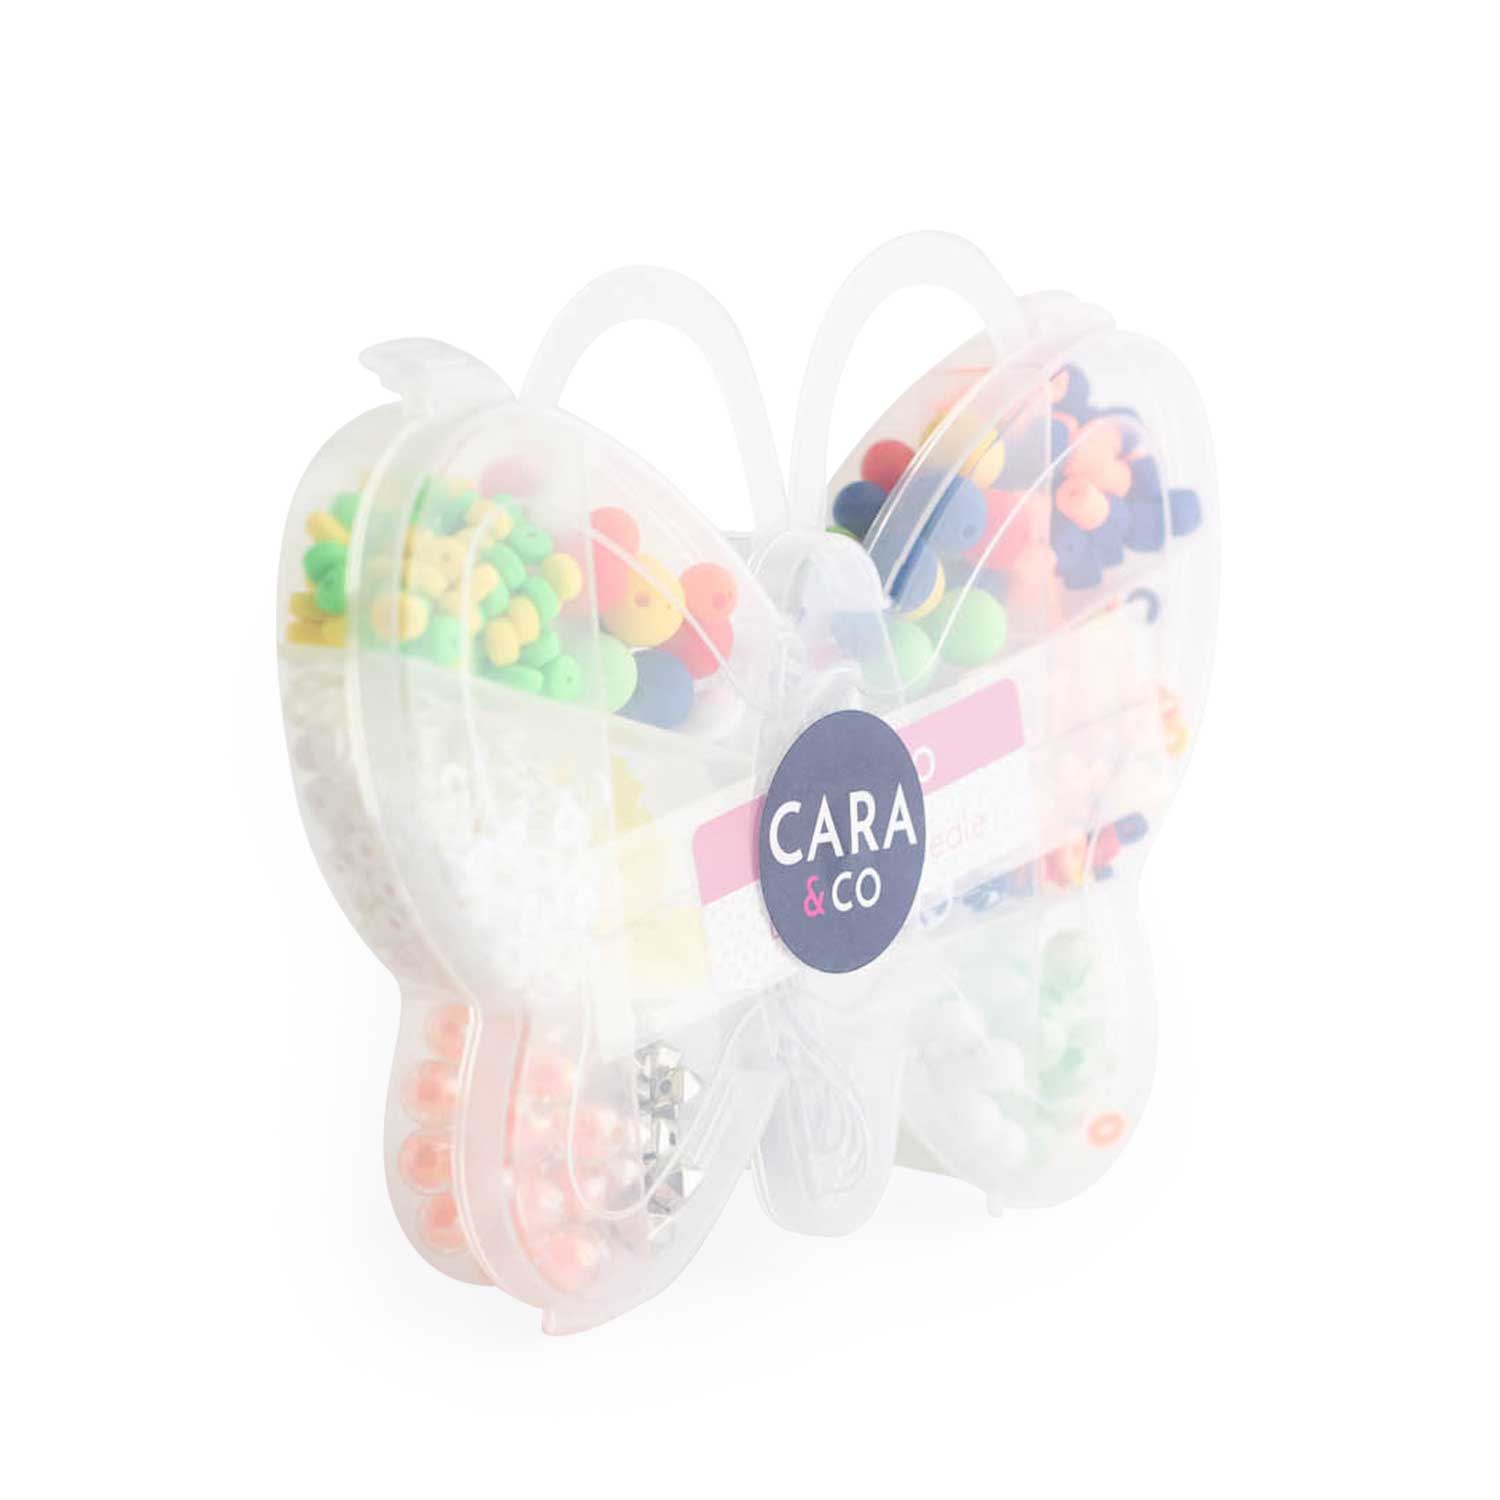 Acrylic Craft Kits Cheerful from Cara & Co Craft Supply